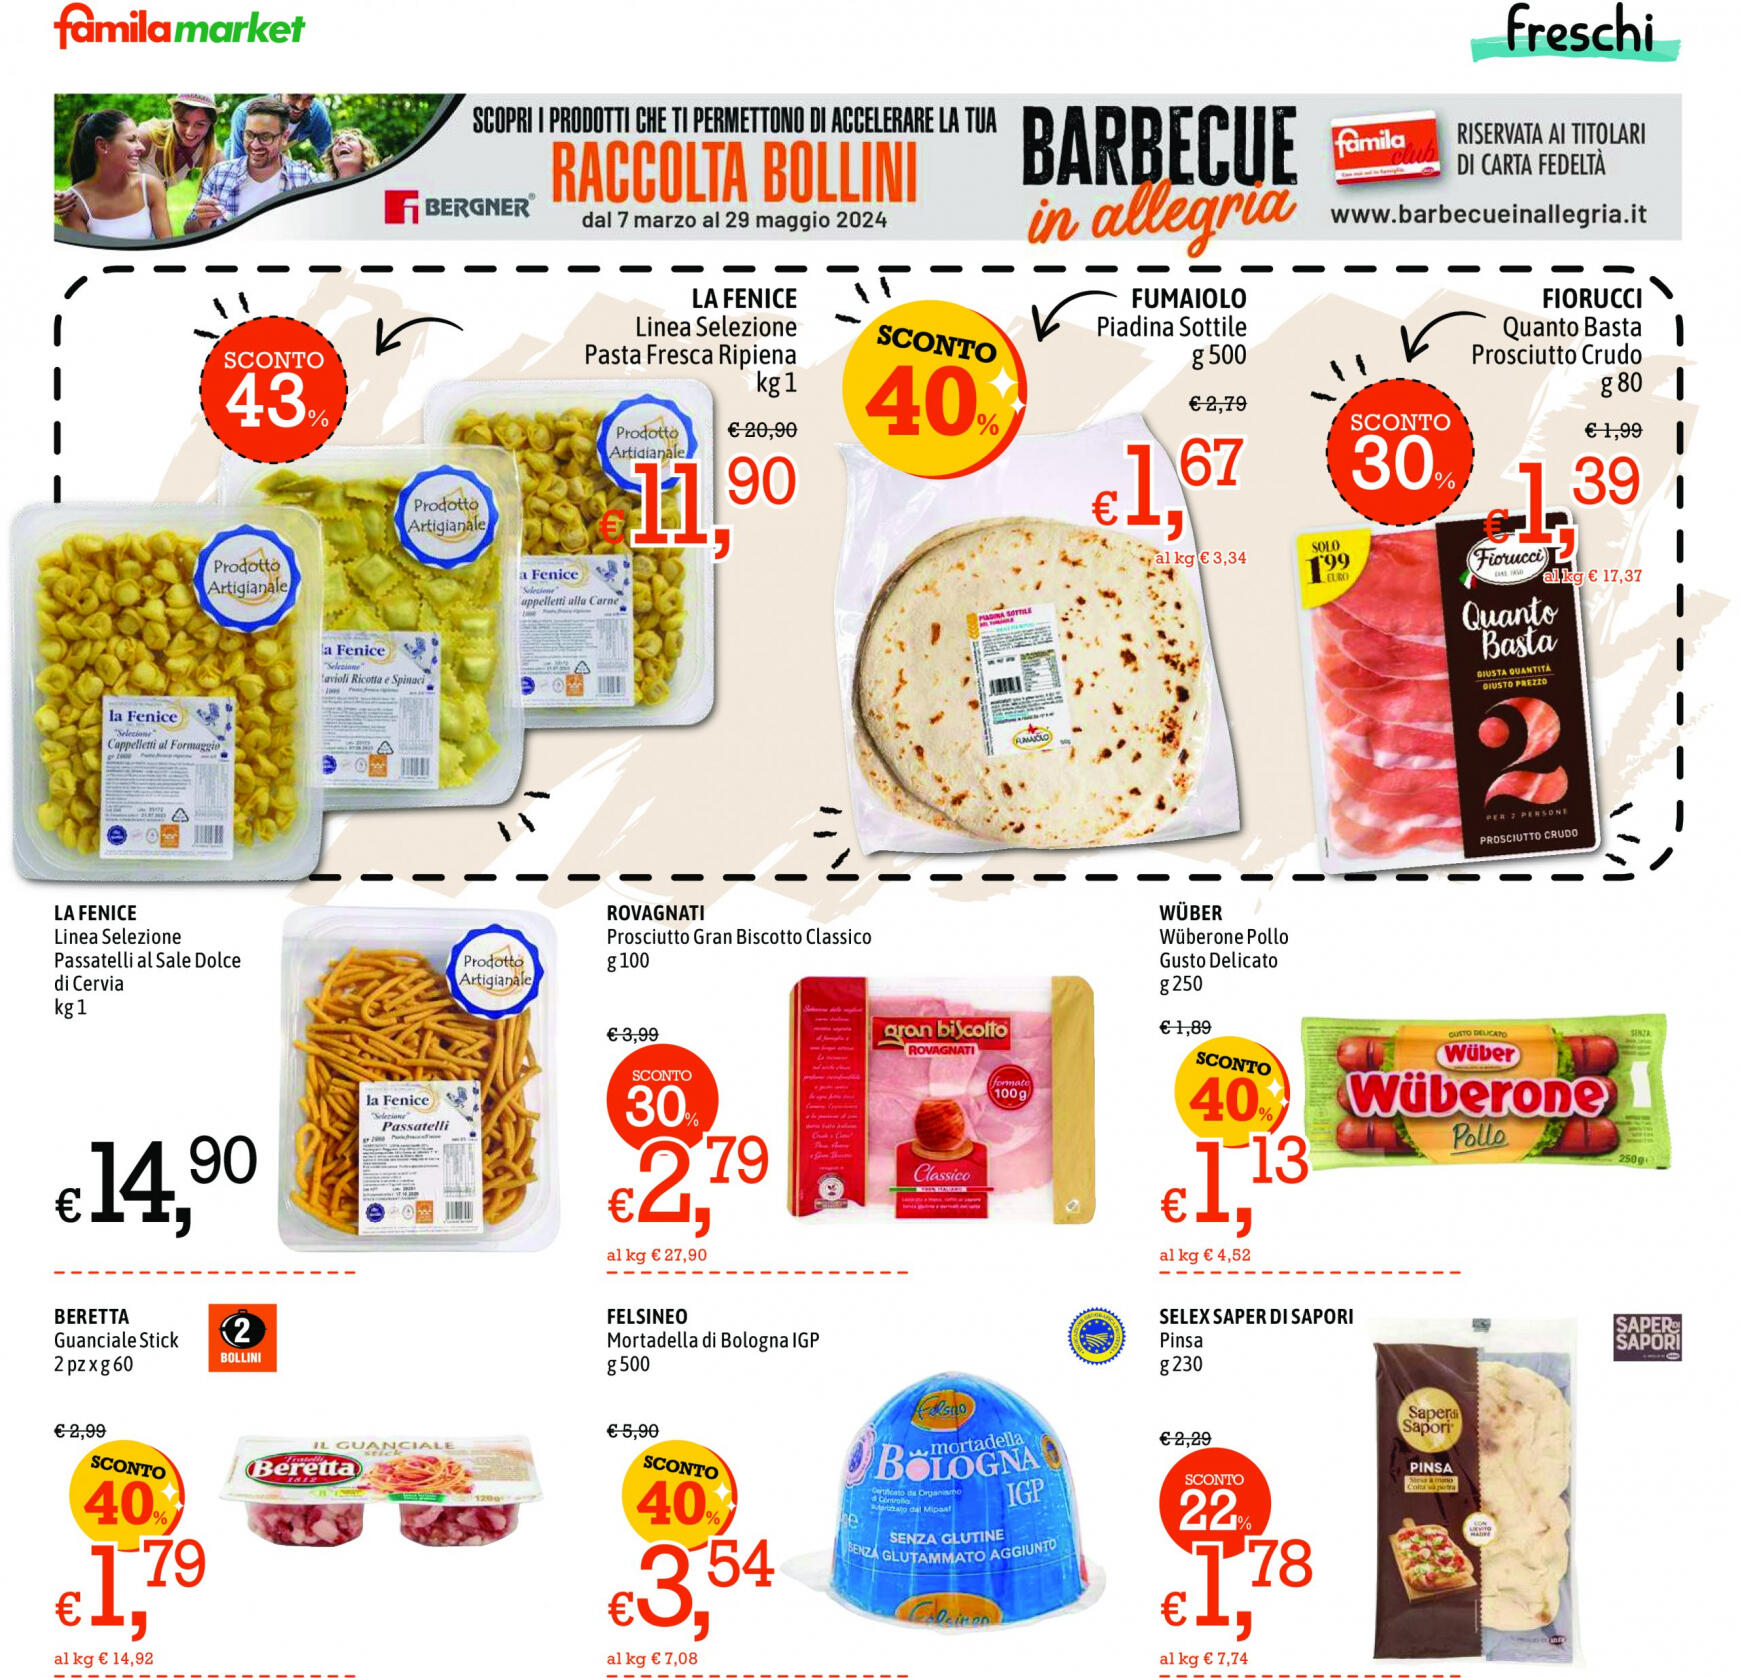 famila - Nuovo volantino Famila market 09.05. - 22.05. - page: 6